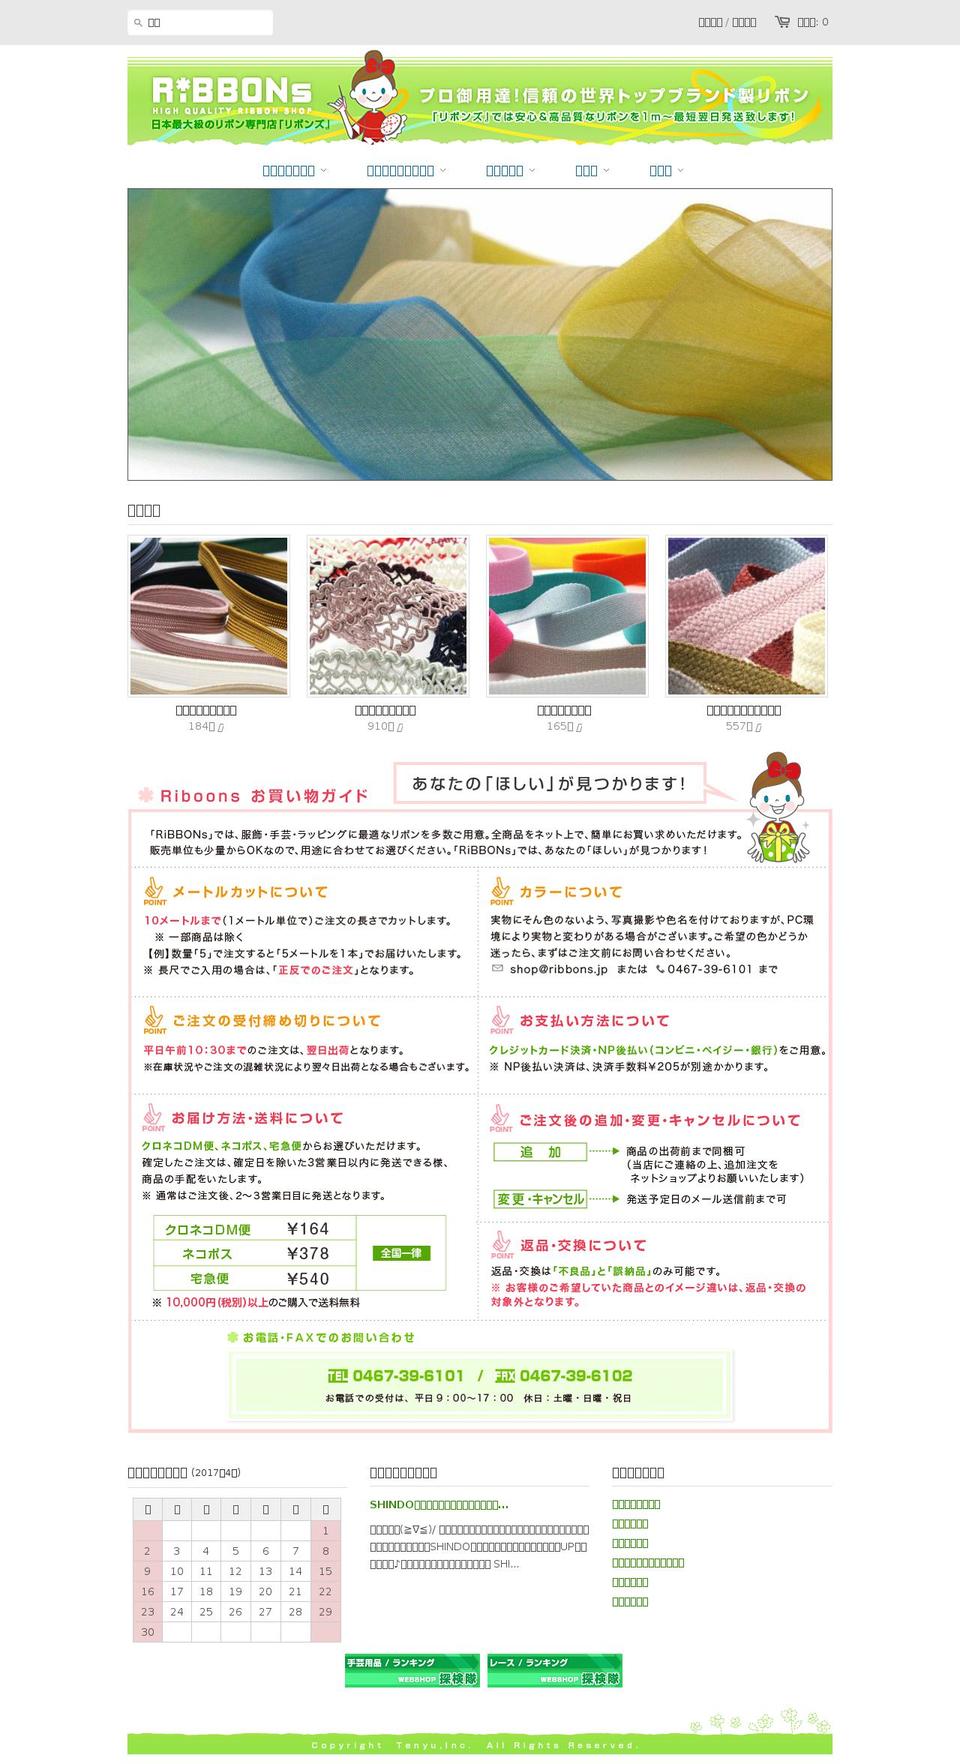 ribbons.jp shopify website screenshot